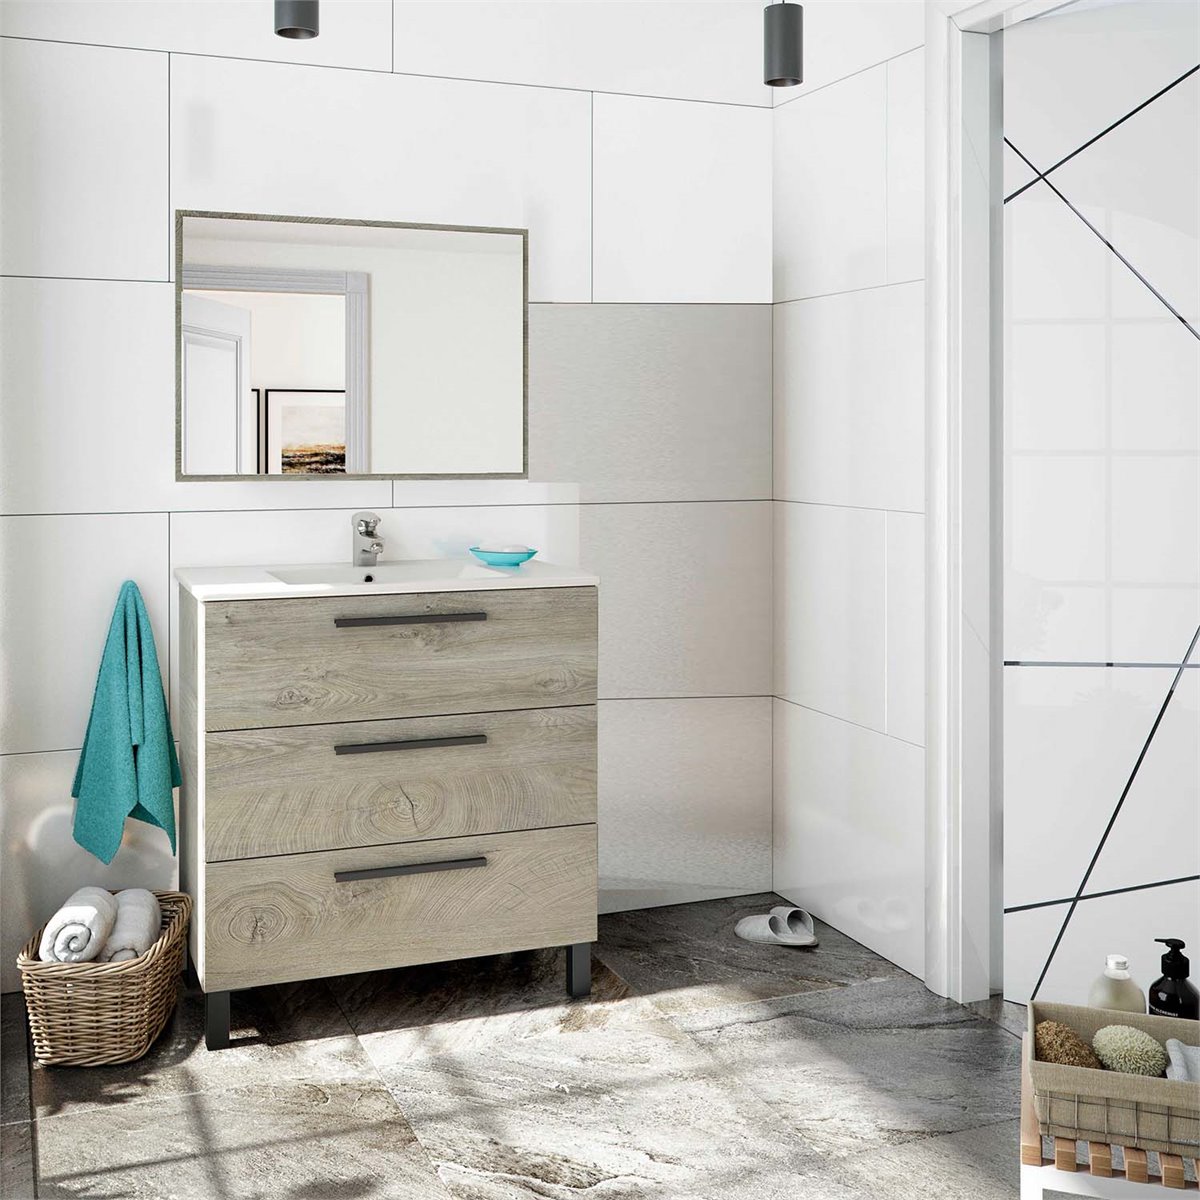 Mueble de baño o aseo con espejo a juego color gris ceniza